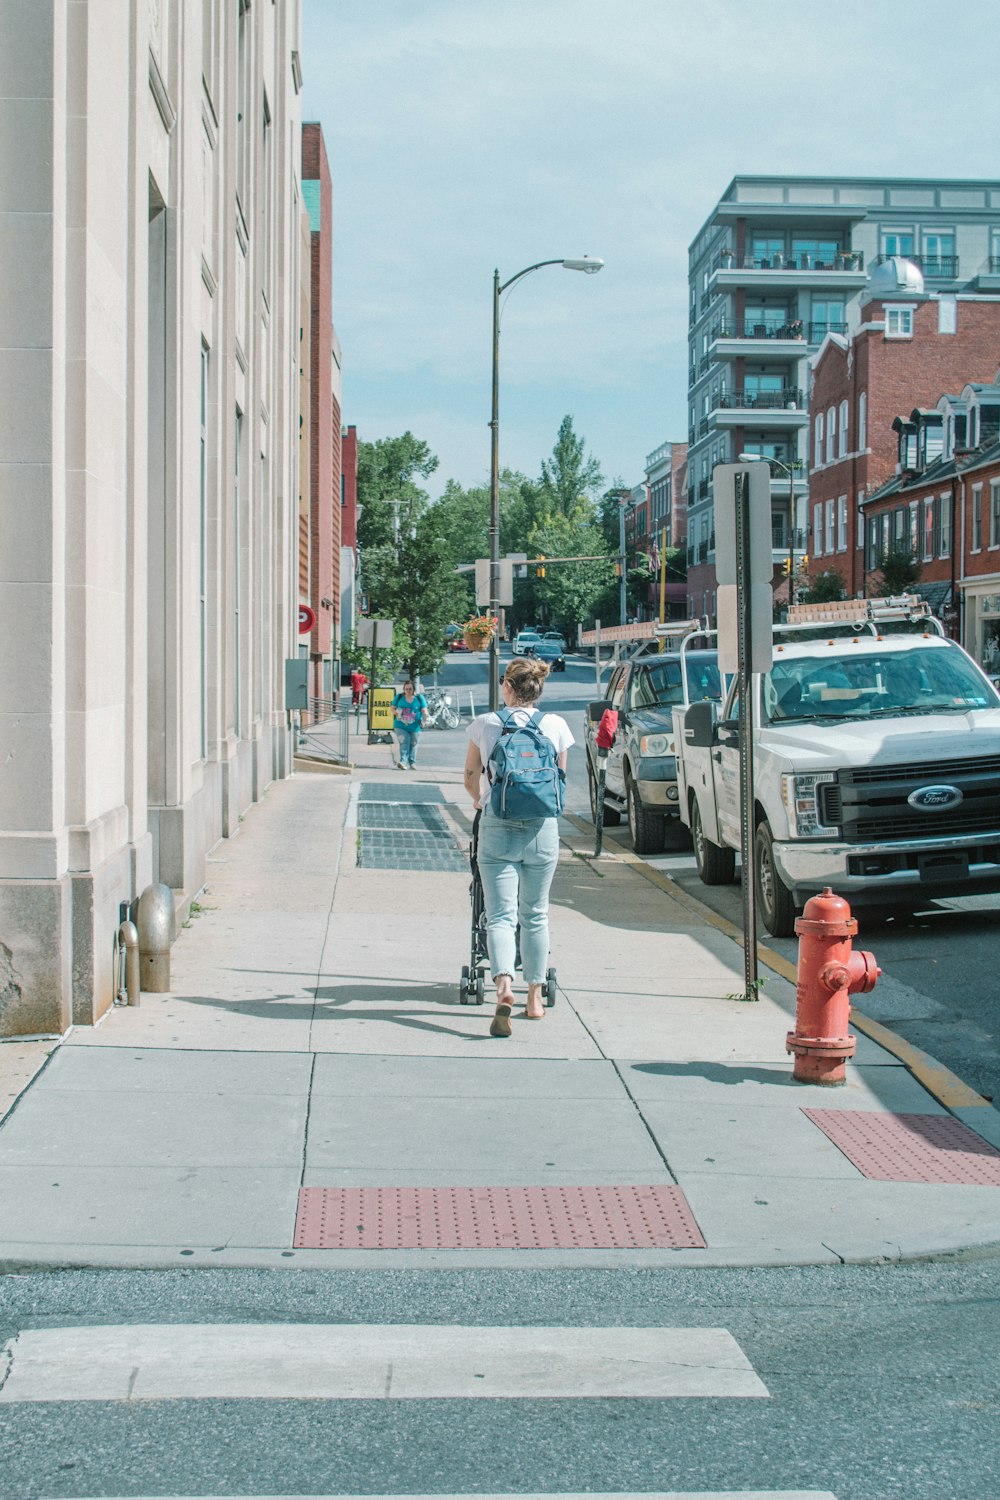 a man riding a skateboard down a sidewalk next to a red fire hydrant